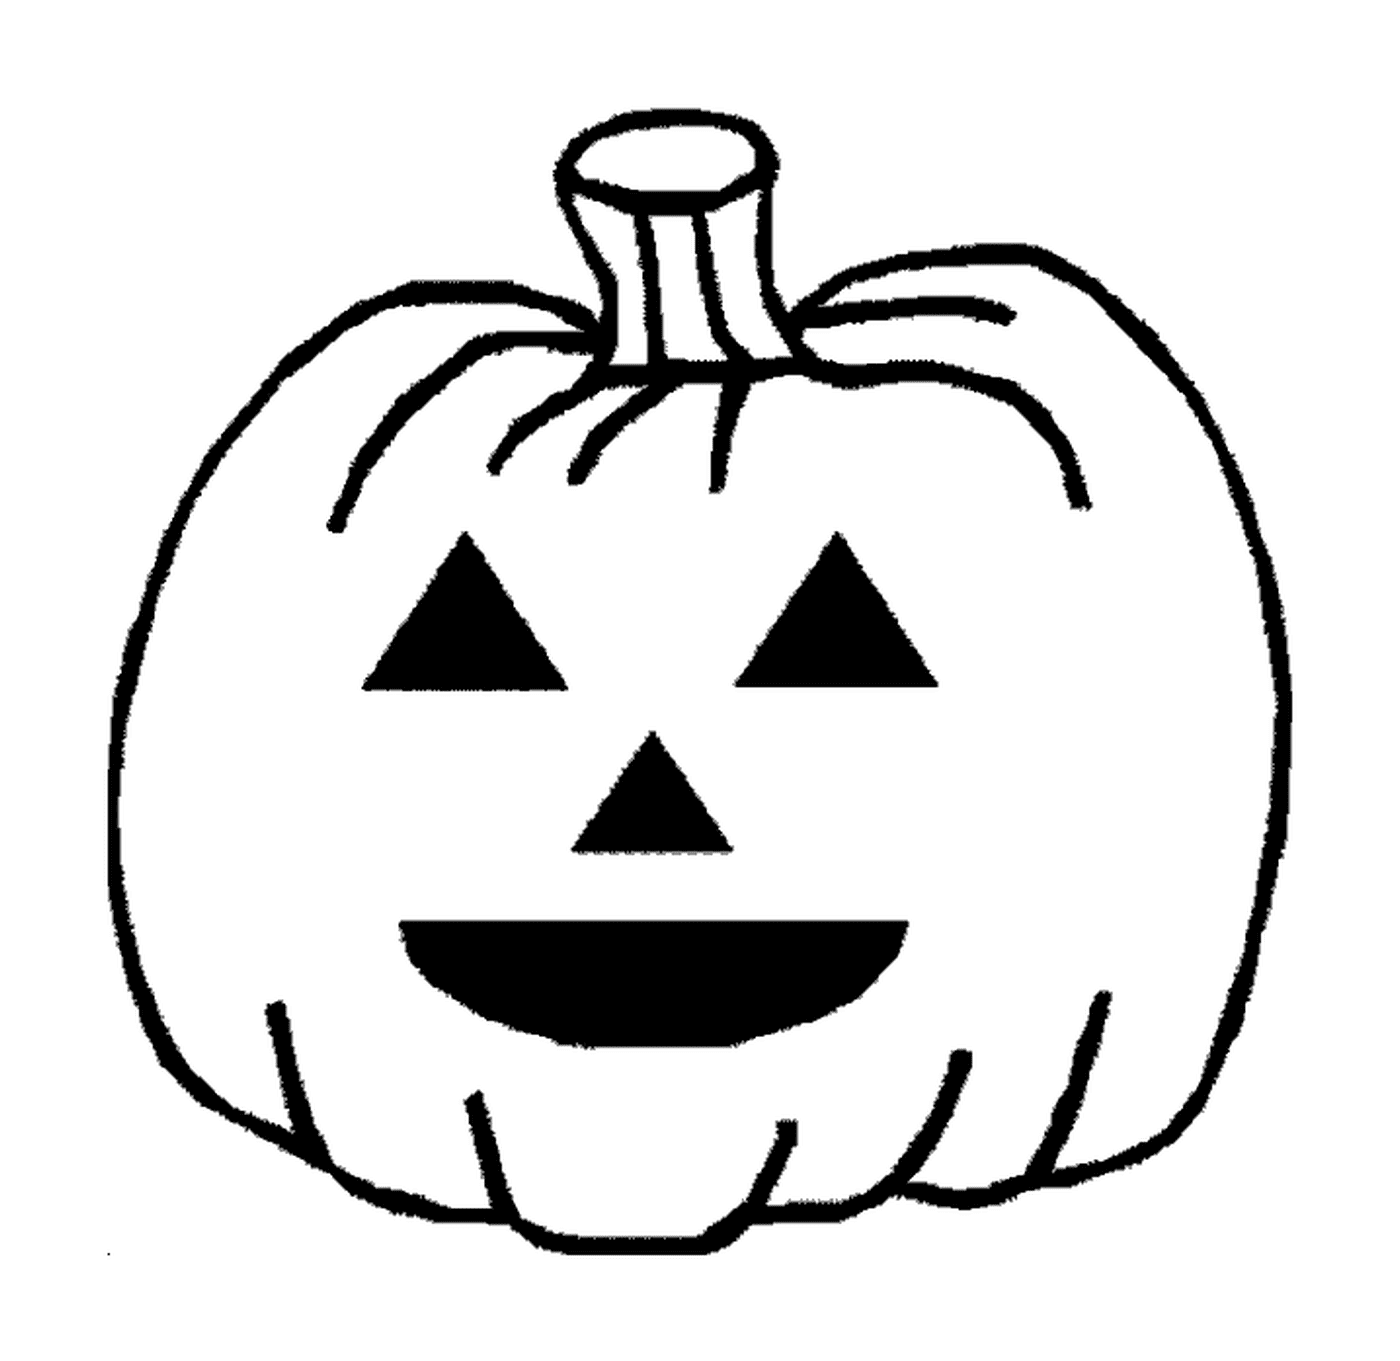  A carved pumpkin 